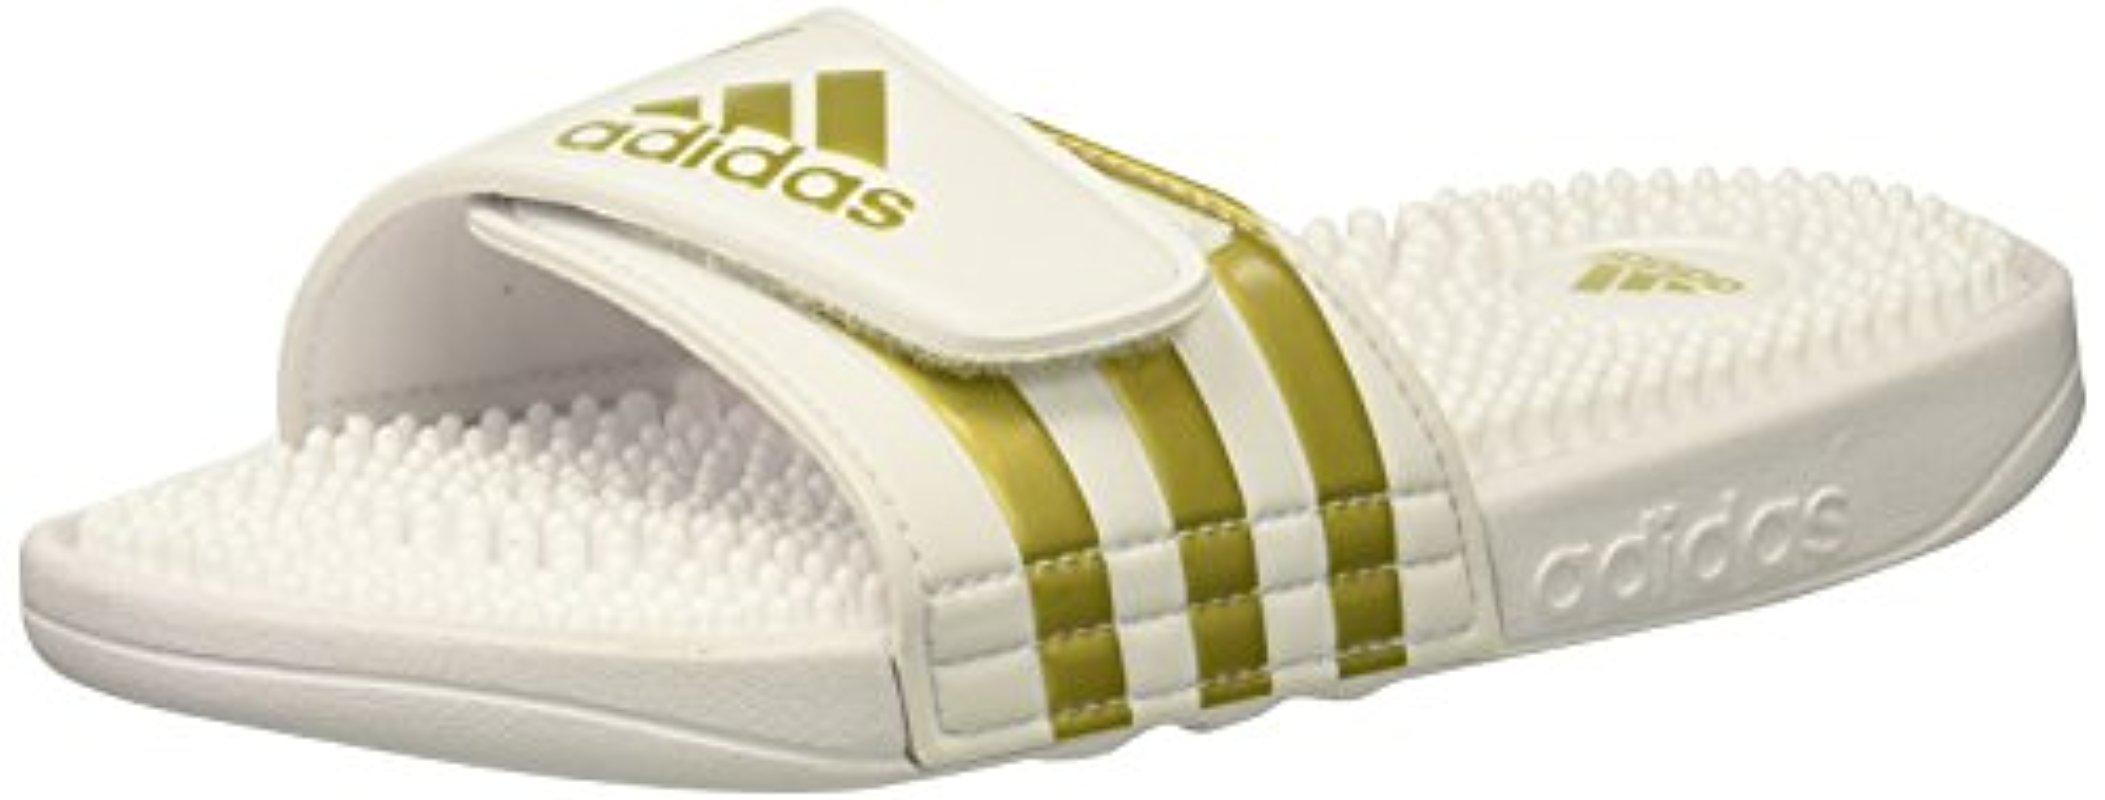 adidas adissage gold